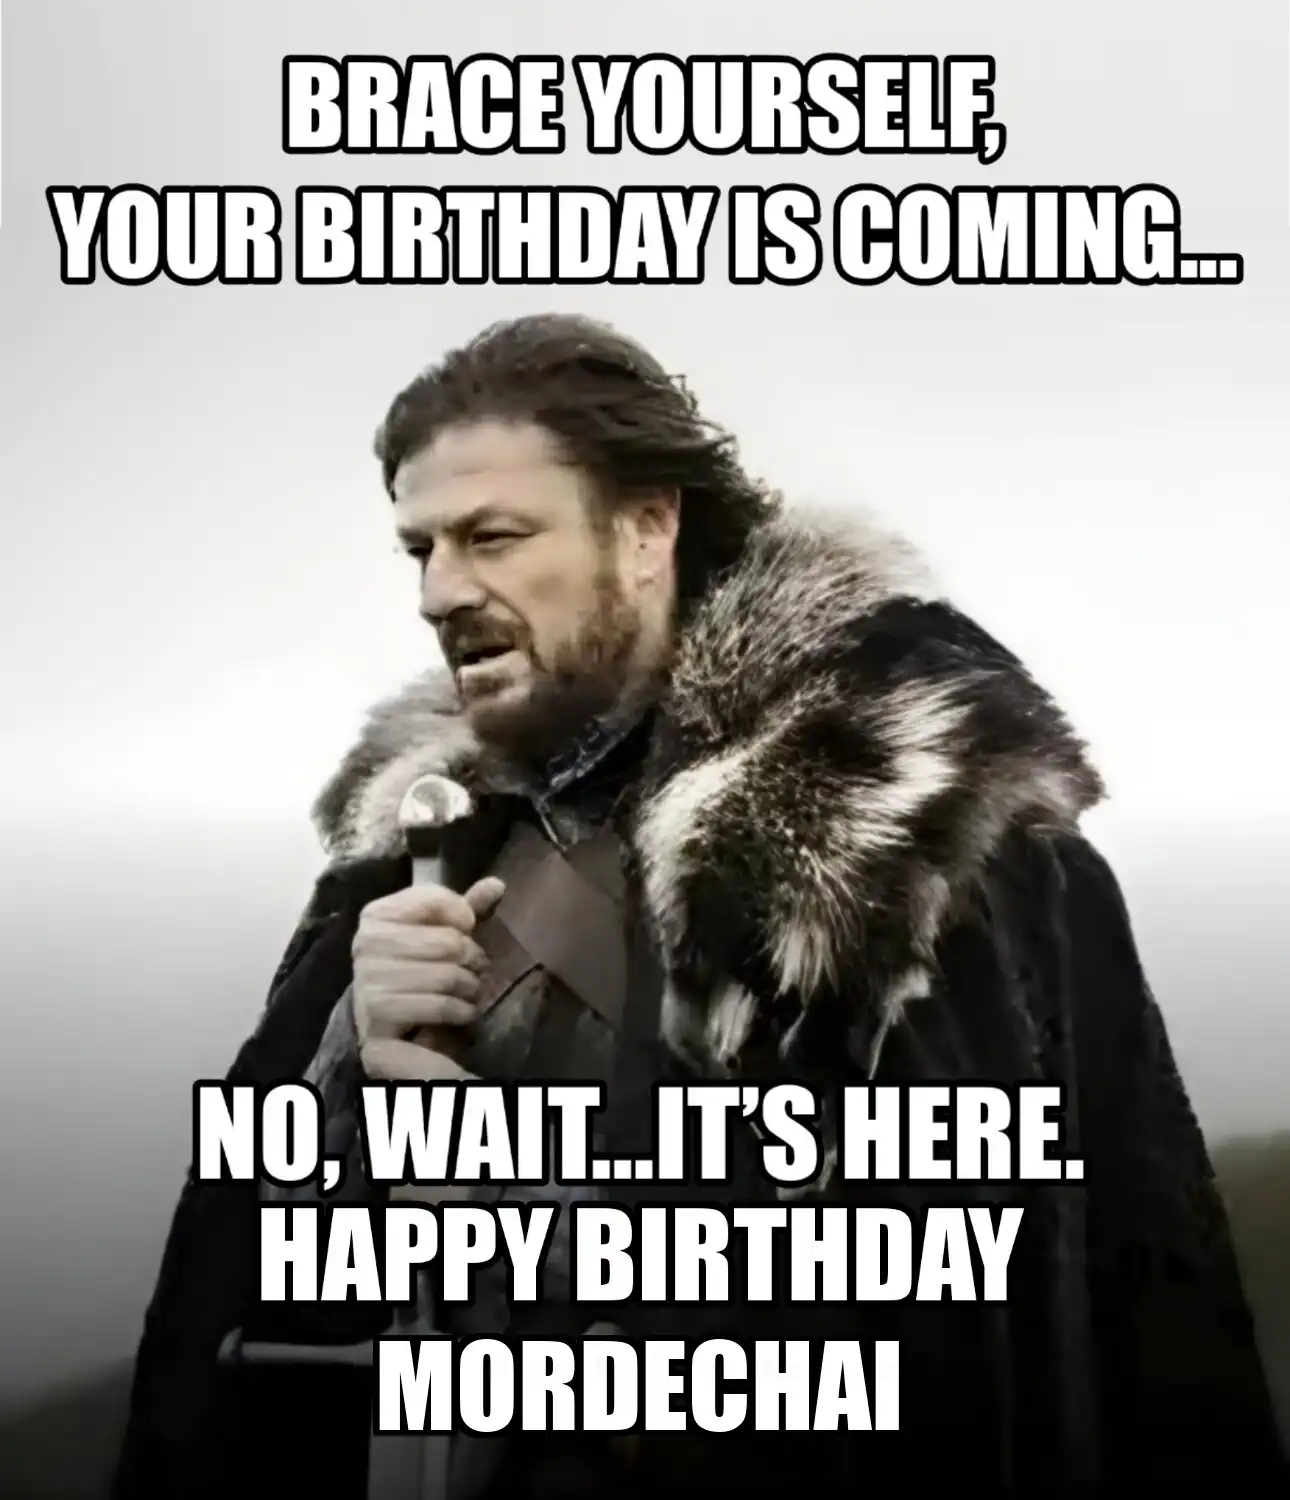 Happy Birthday Mordechai Brace Yourself Your Birthday Is Coming Meme